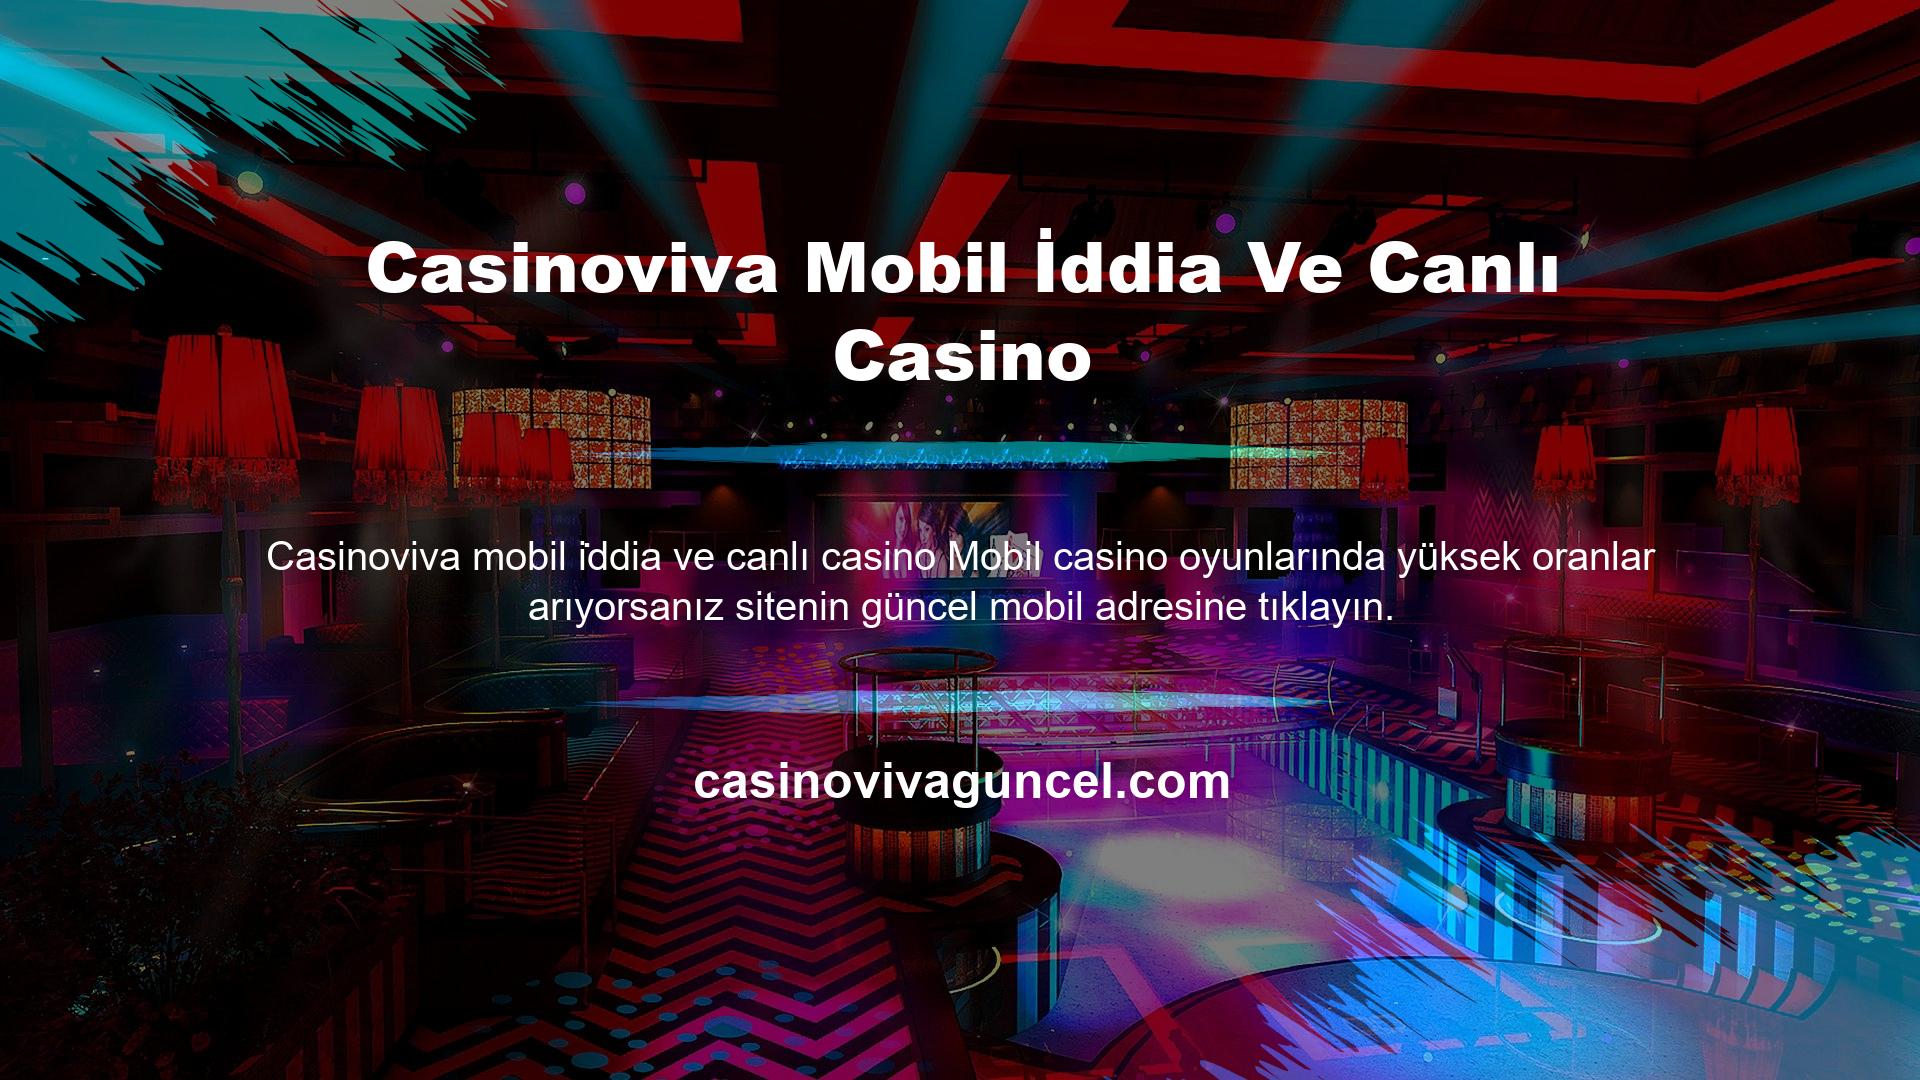 Casinoviva Mobil İddia Ve Canlı Casino